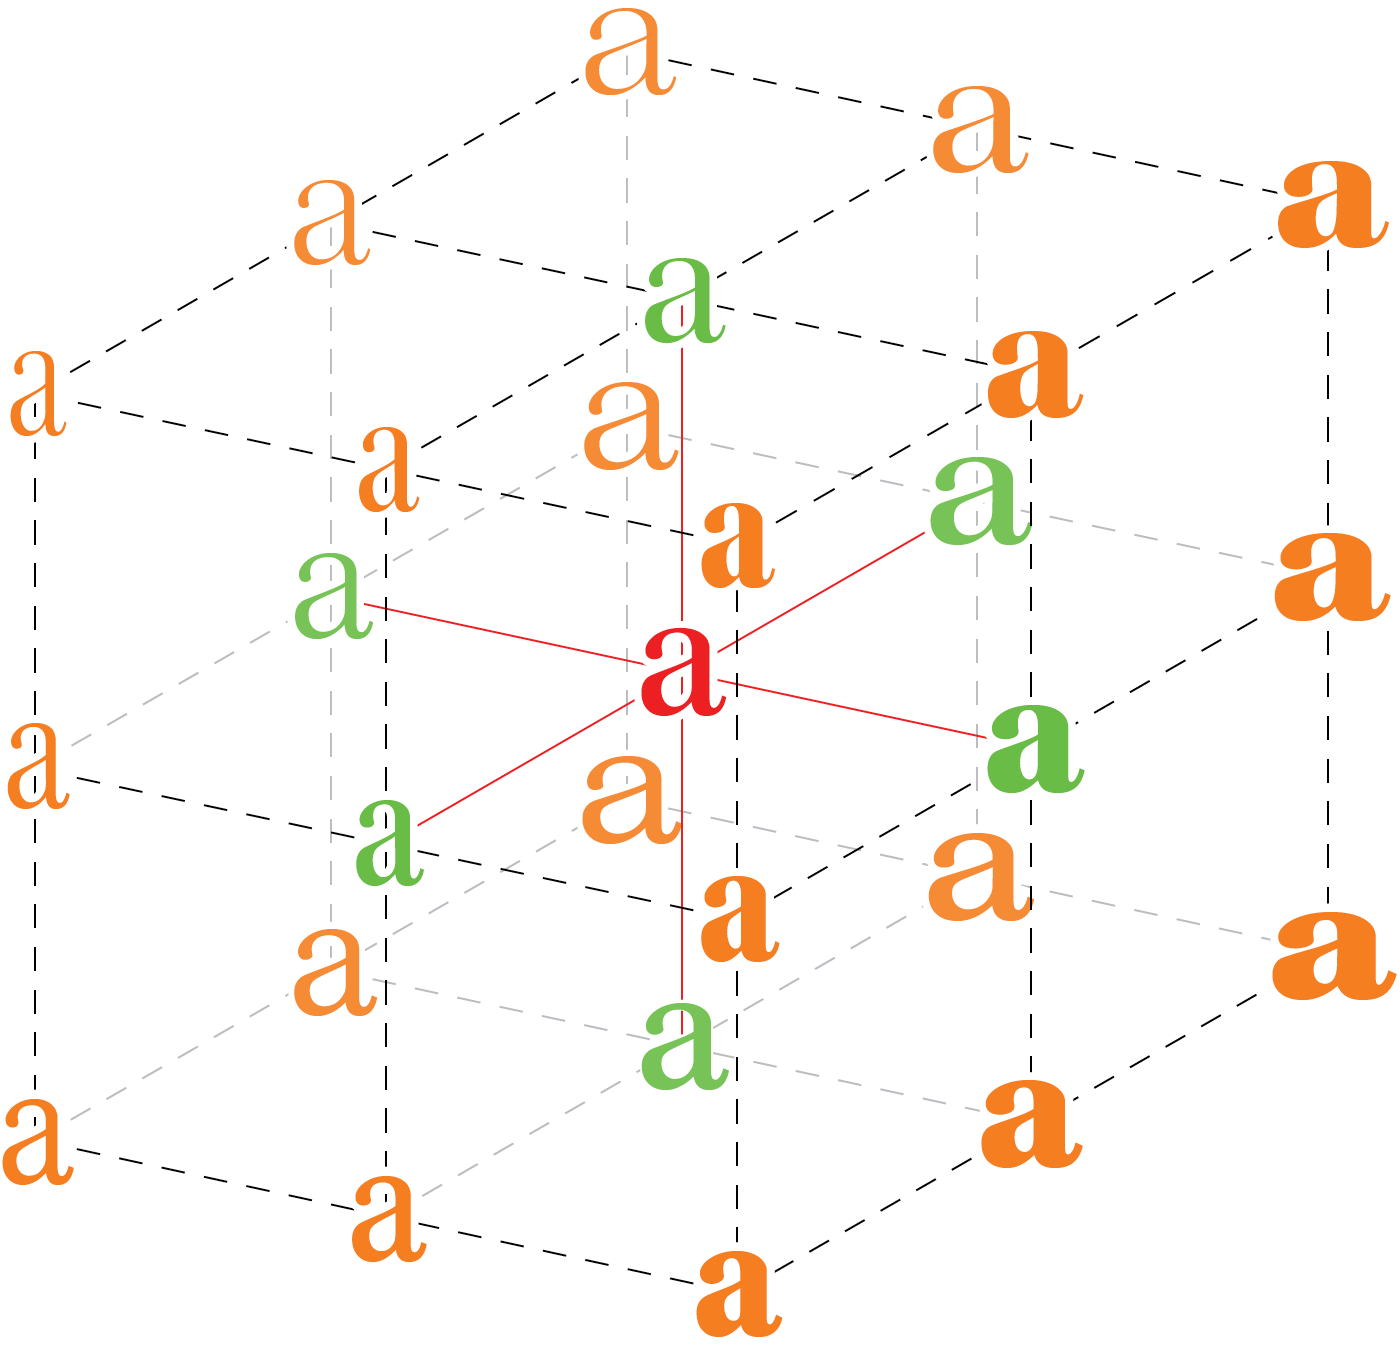 可变字体的示意模型（图源 https://medium.com/variable-fonts/https-medium-com-tiro-introducing-opentype-variable-fonts-12ba6cd2369）